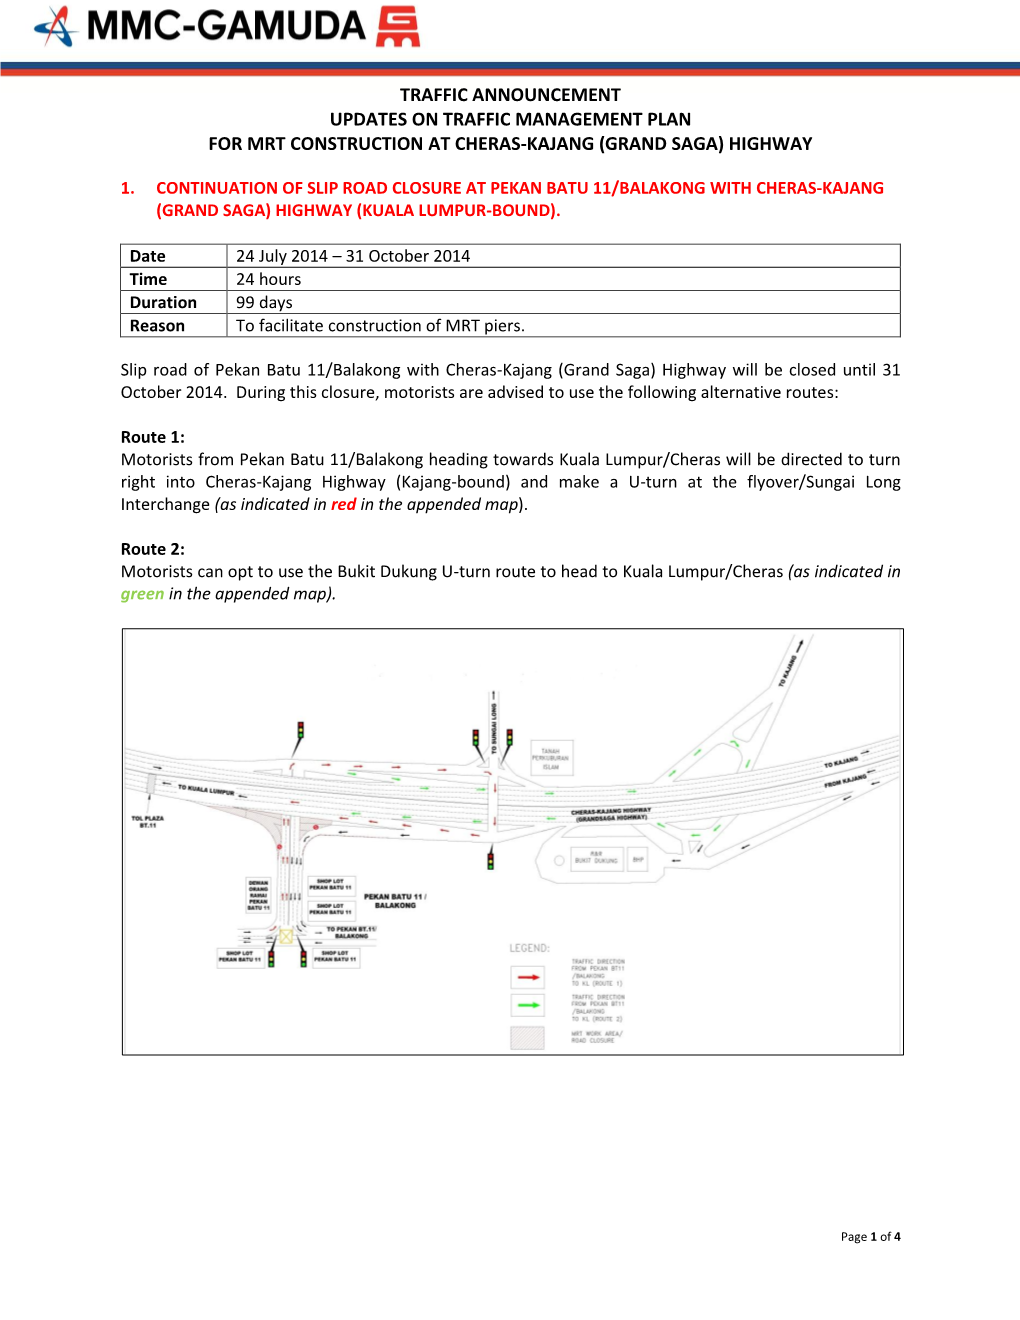 Traffic Announcement Updates on Traffic Management Plan for Mrt Construction at Cheras-Kajang (Grand Saga) Highway